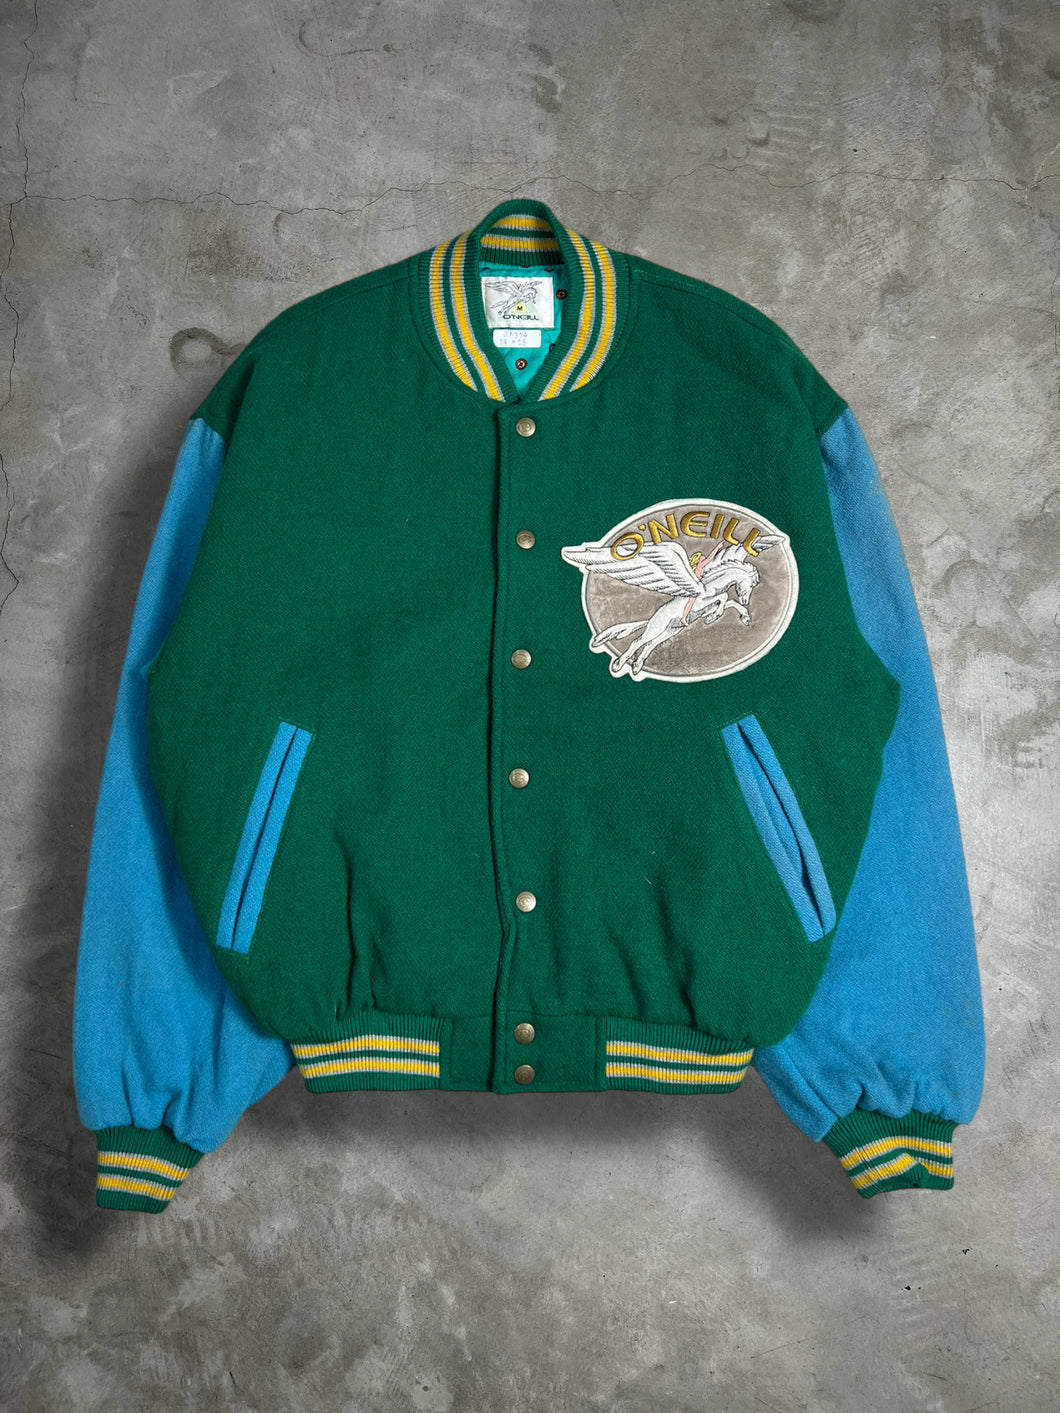 Vintage 80s O'neill Lined Wool Varsity Jacket (M) JK314